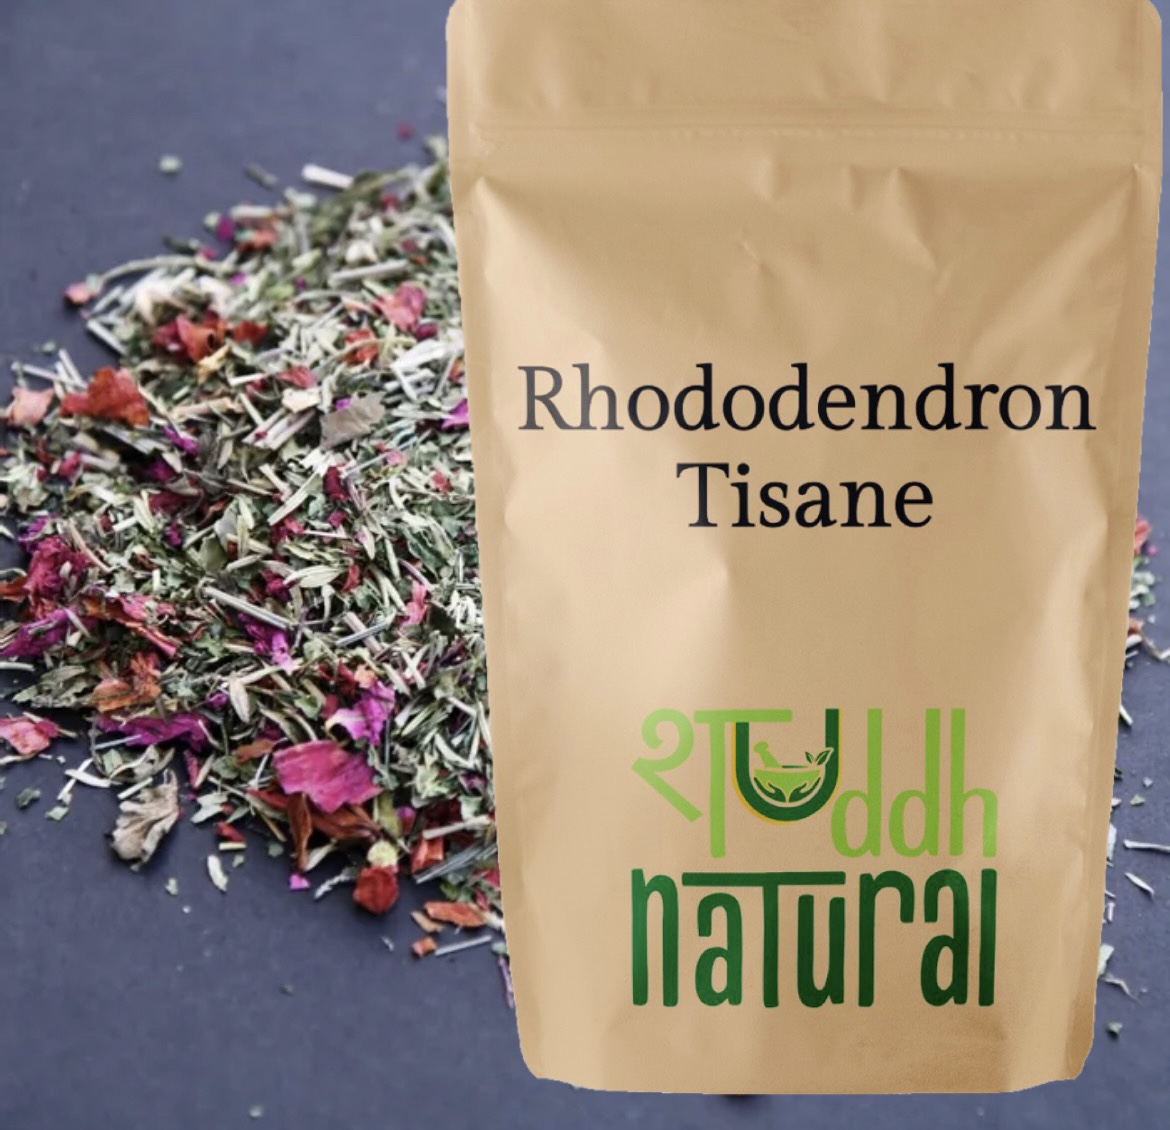 Product: Shuddh Natural Vrinda (Tulsi Buransh) Tisane